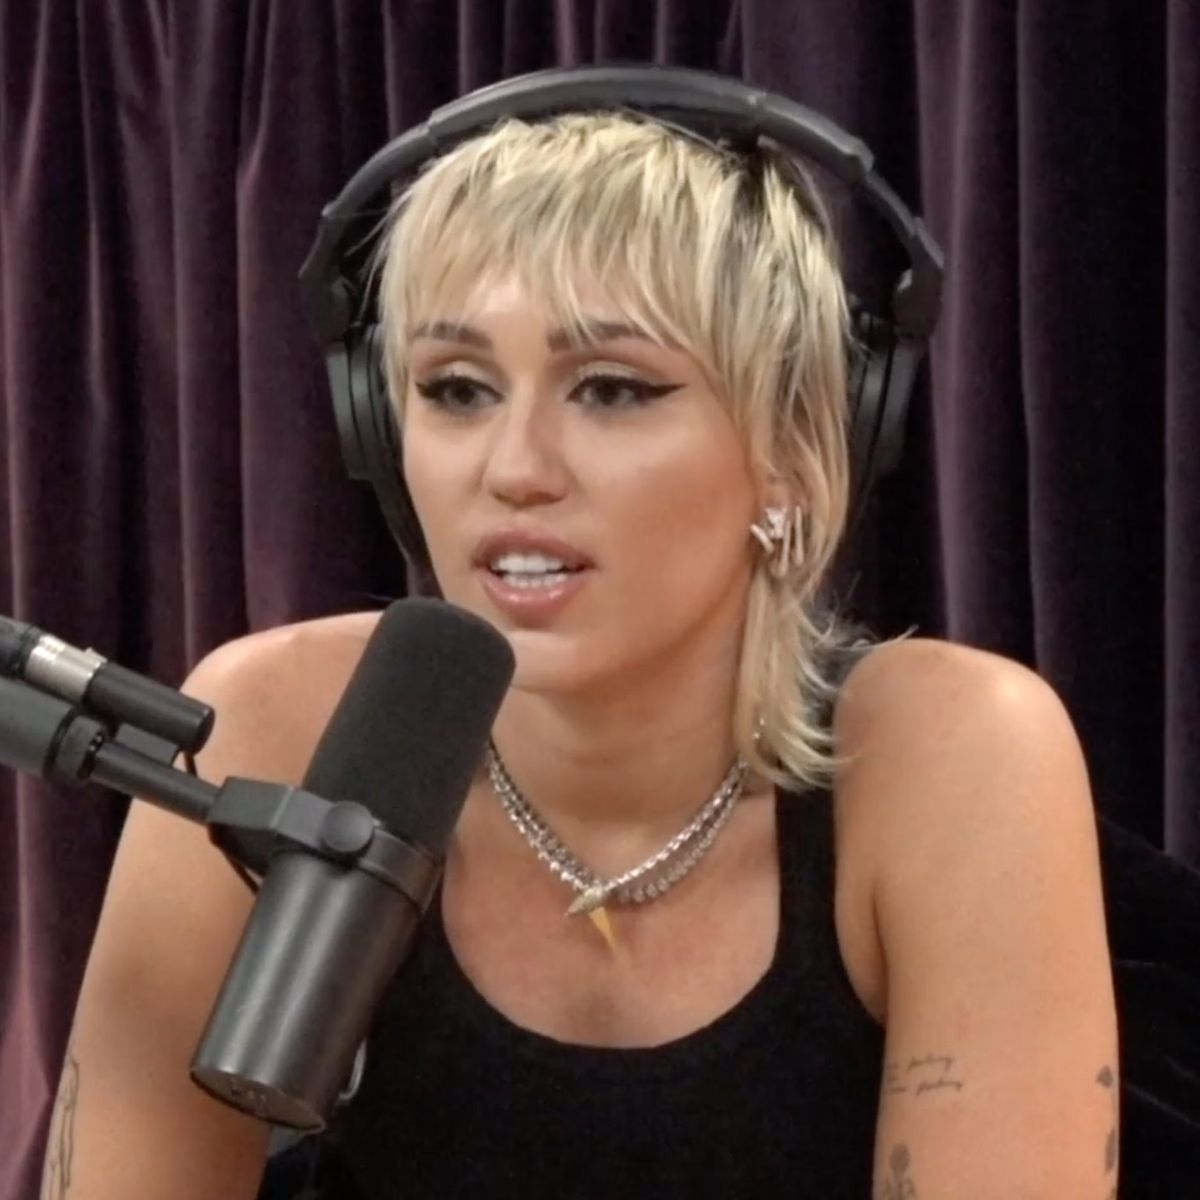 Miley Cyrus Tells Joe Rogan About Her Head Injury On Podcast